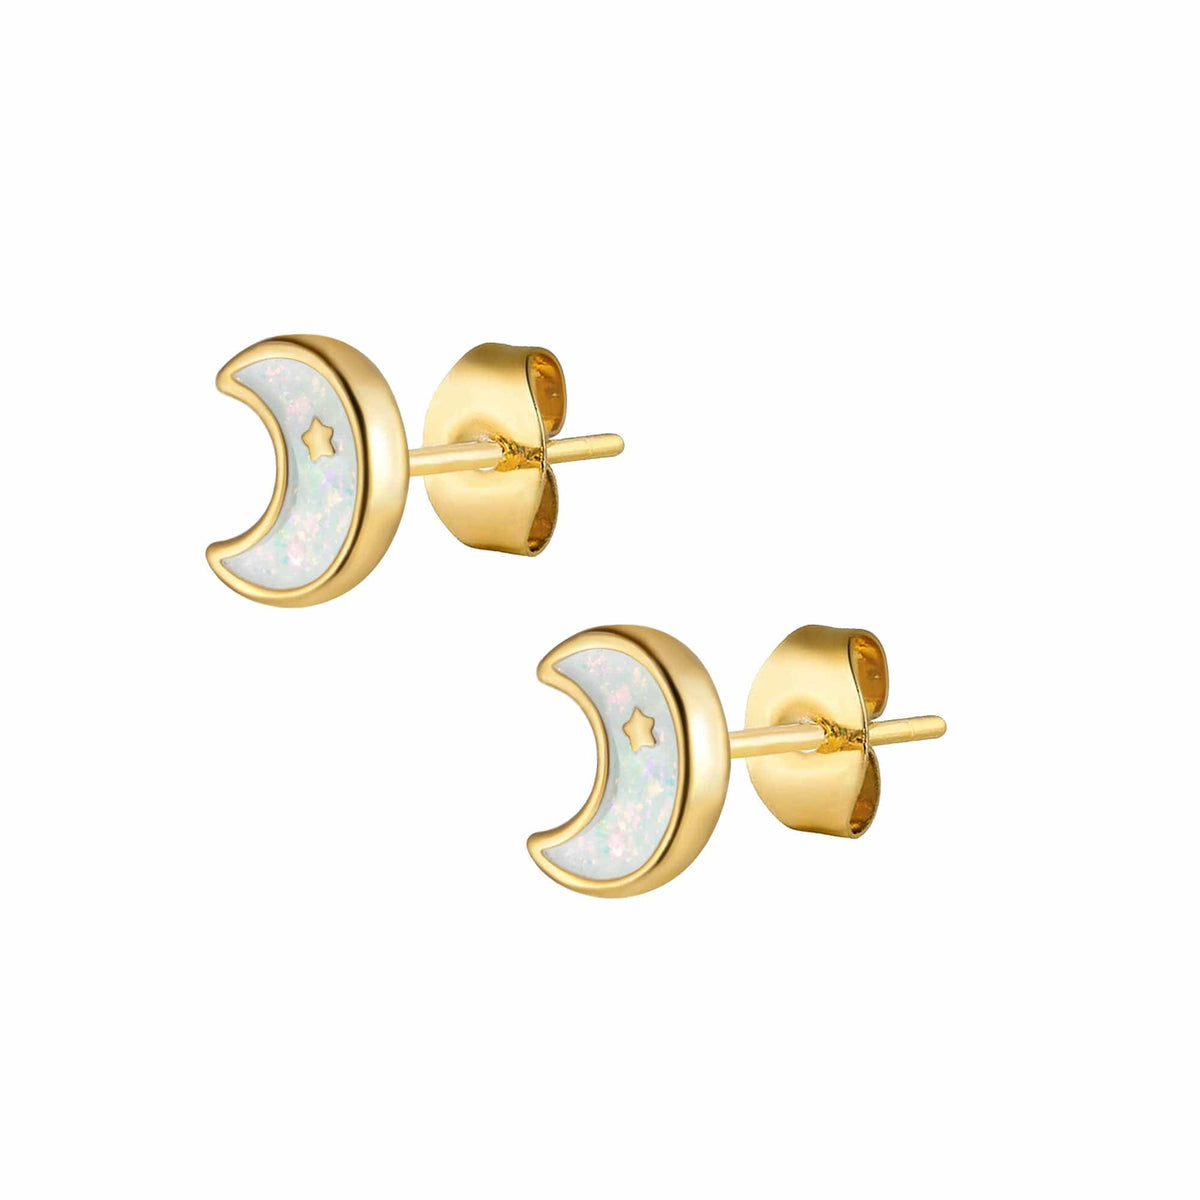 BOHOMOON Stainless Steel Alaska Moon Stud Earrings Gold